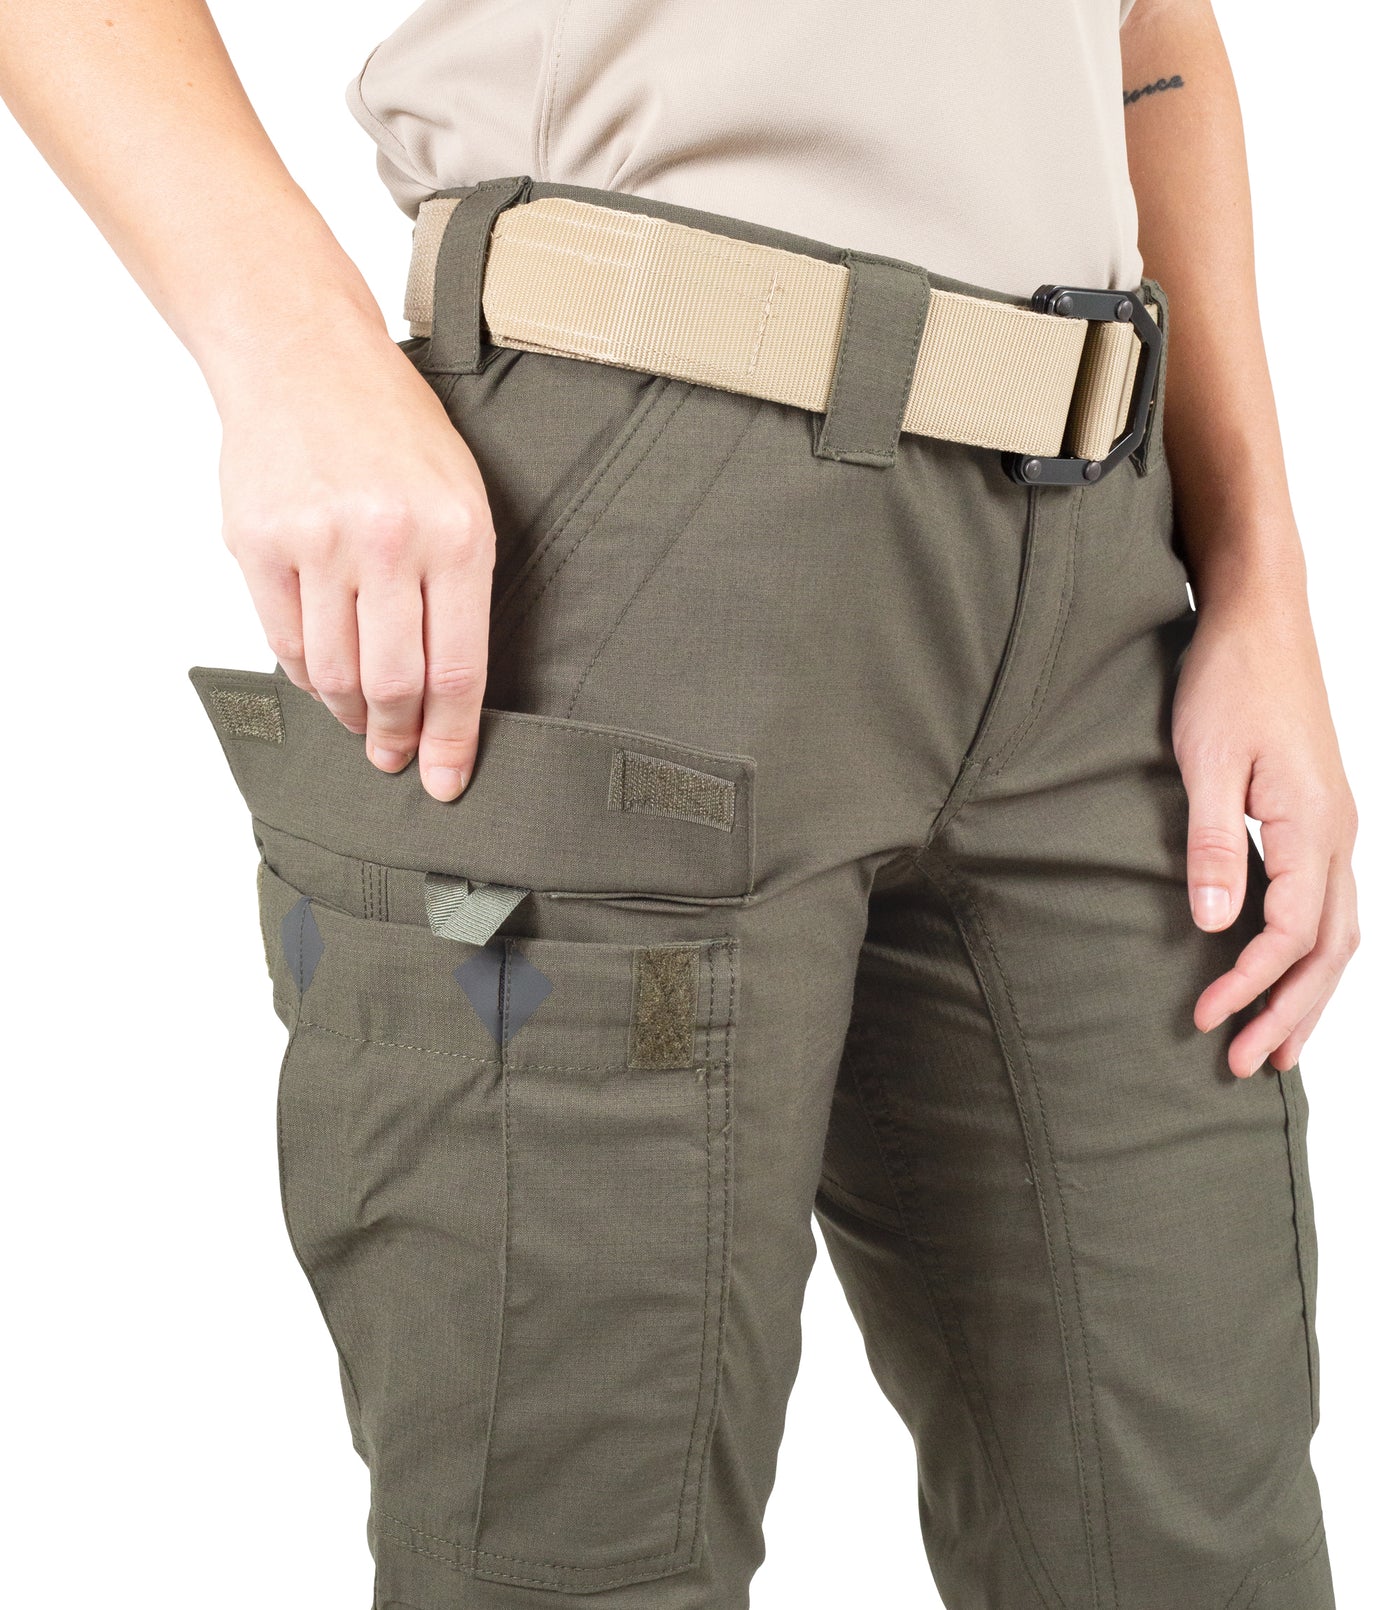 Pocket of Women's V2 BDU Pant in OD Green